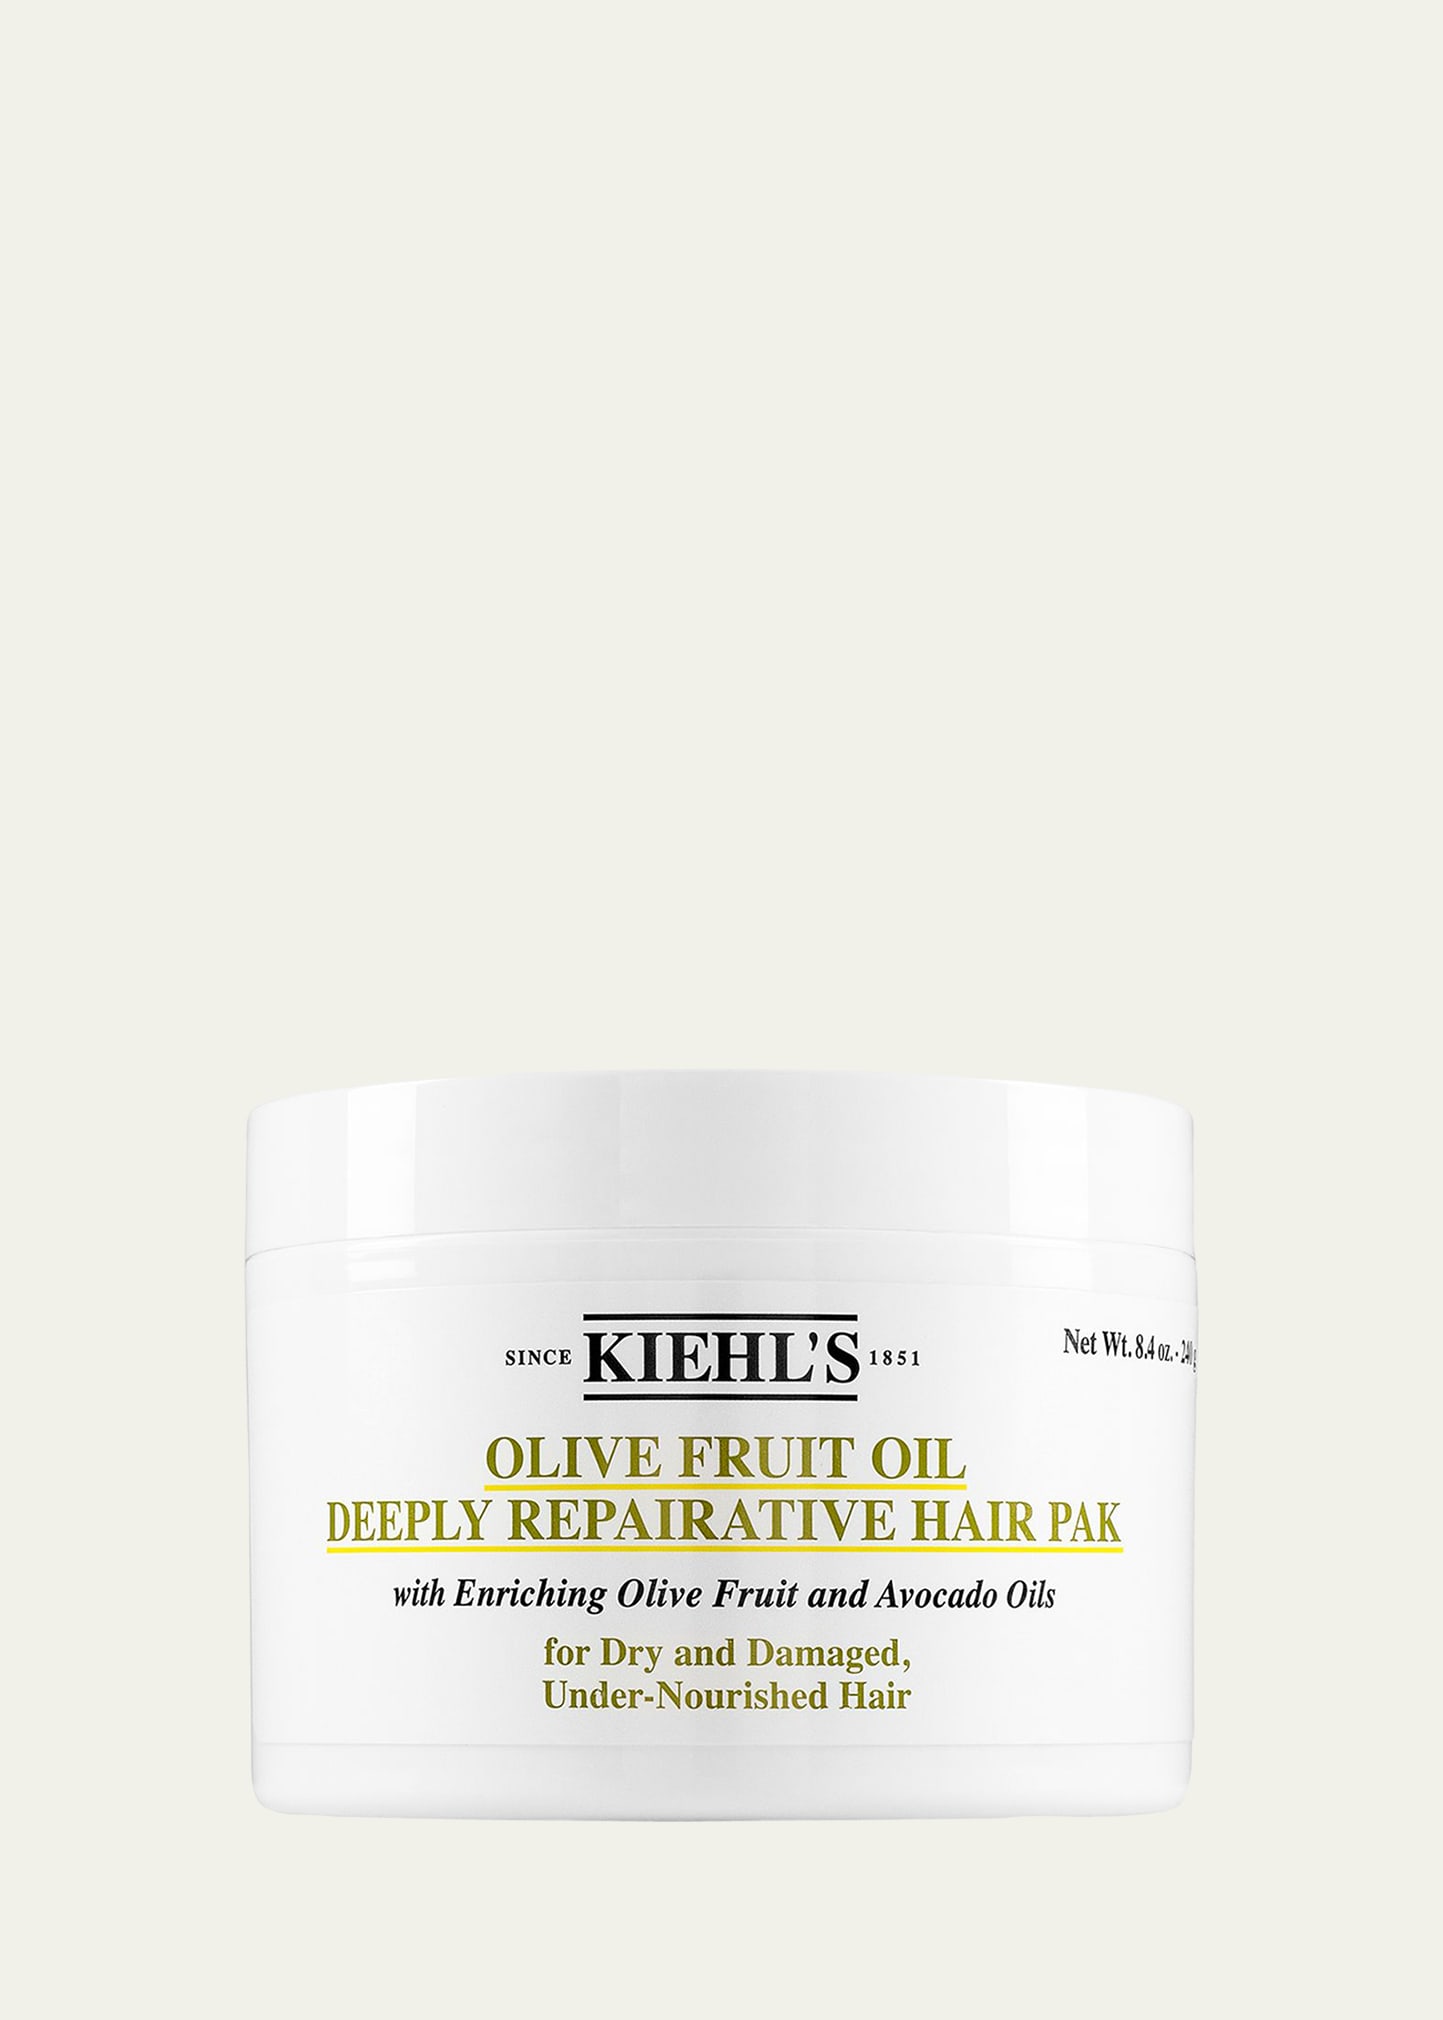 8 oz. Olive Fruit Oil Deeply Repairative Hair Pak